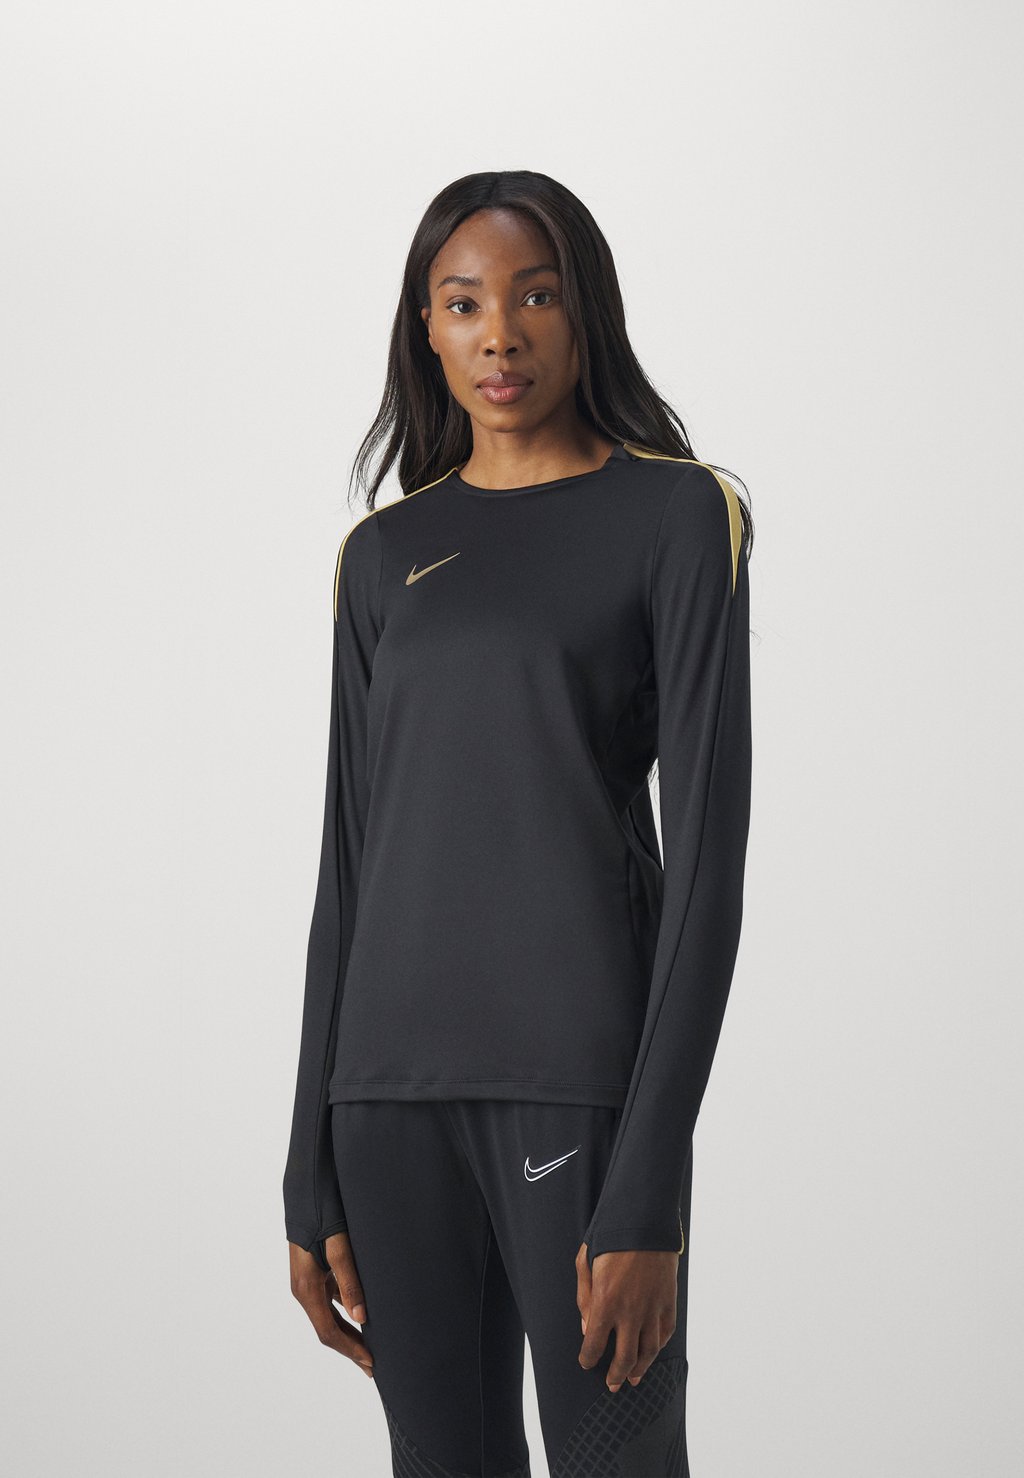 Рубашка с длинным рукавом STRIKE CREW Nike, цвет black/jersey gold/metallic gold цена и фото